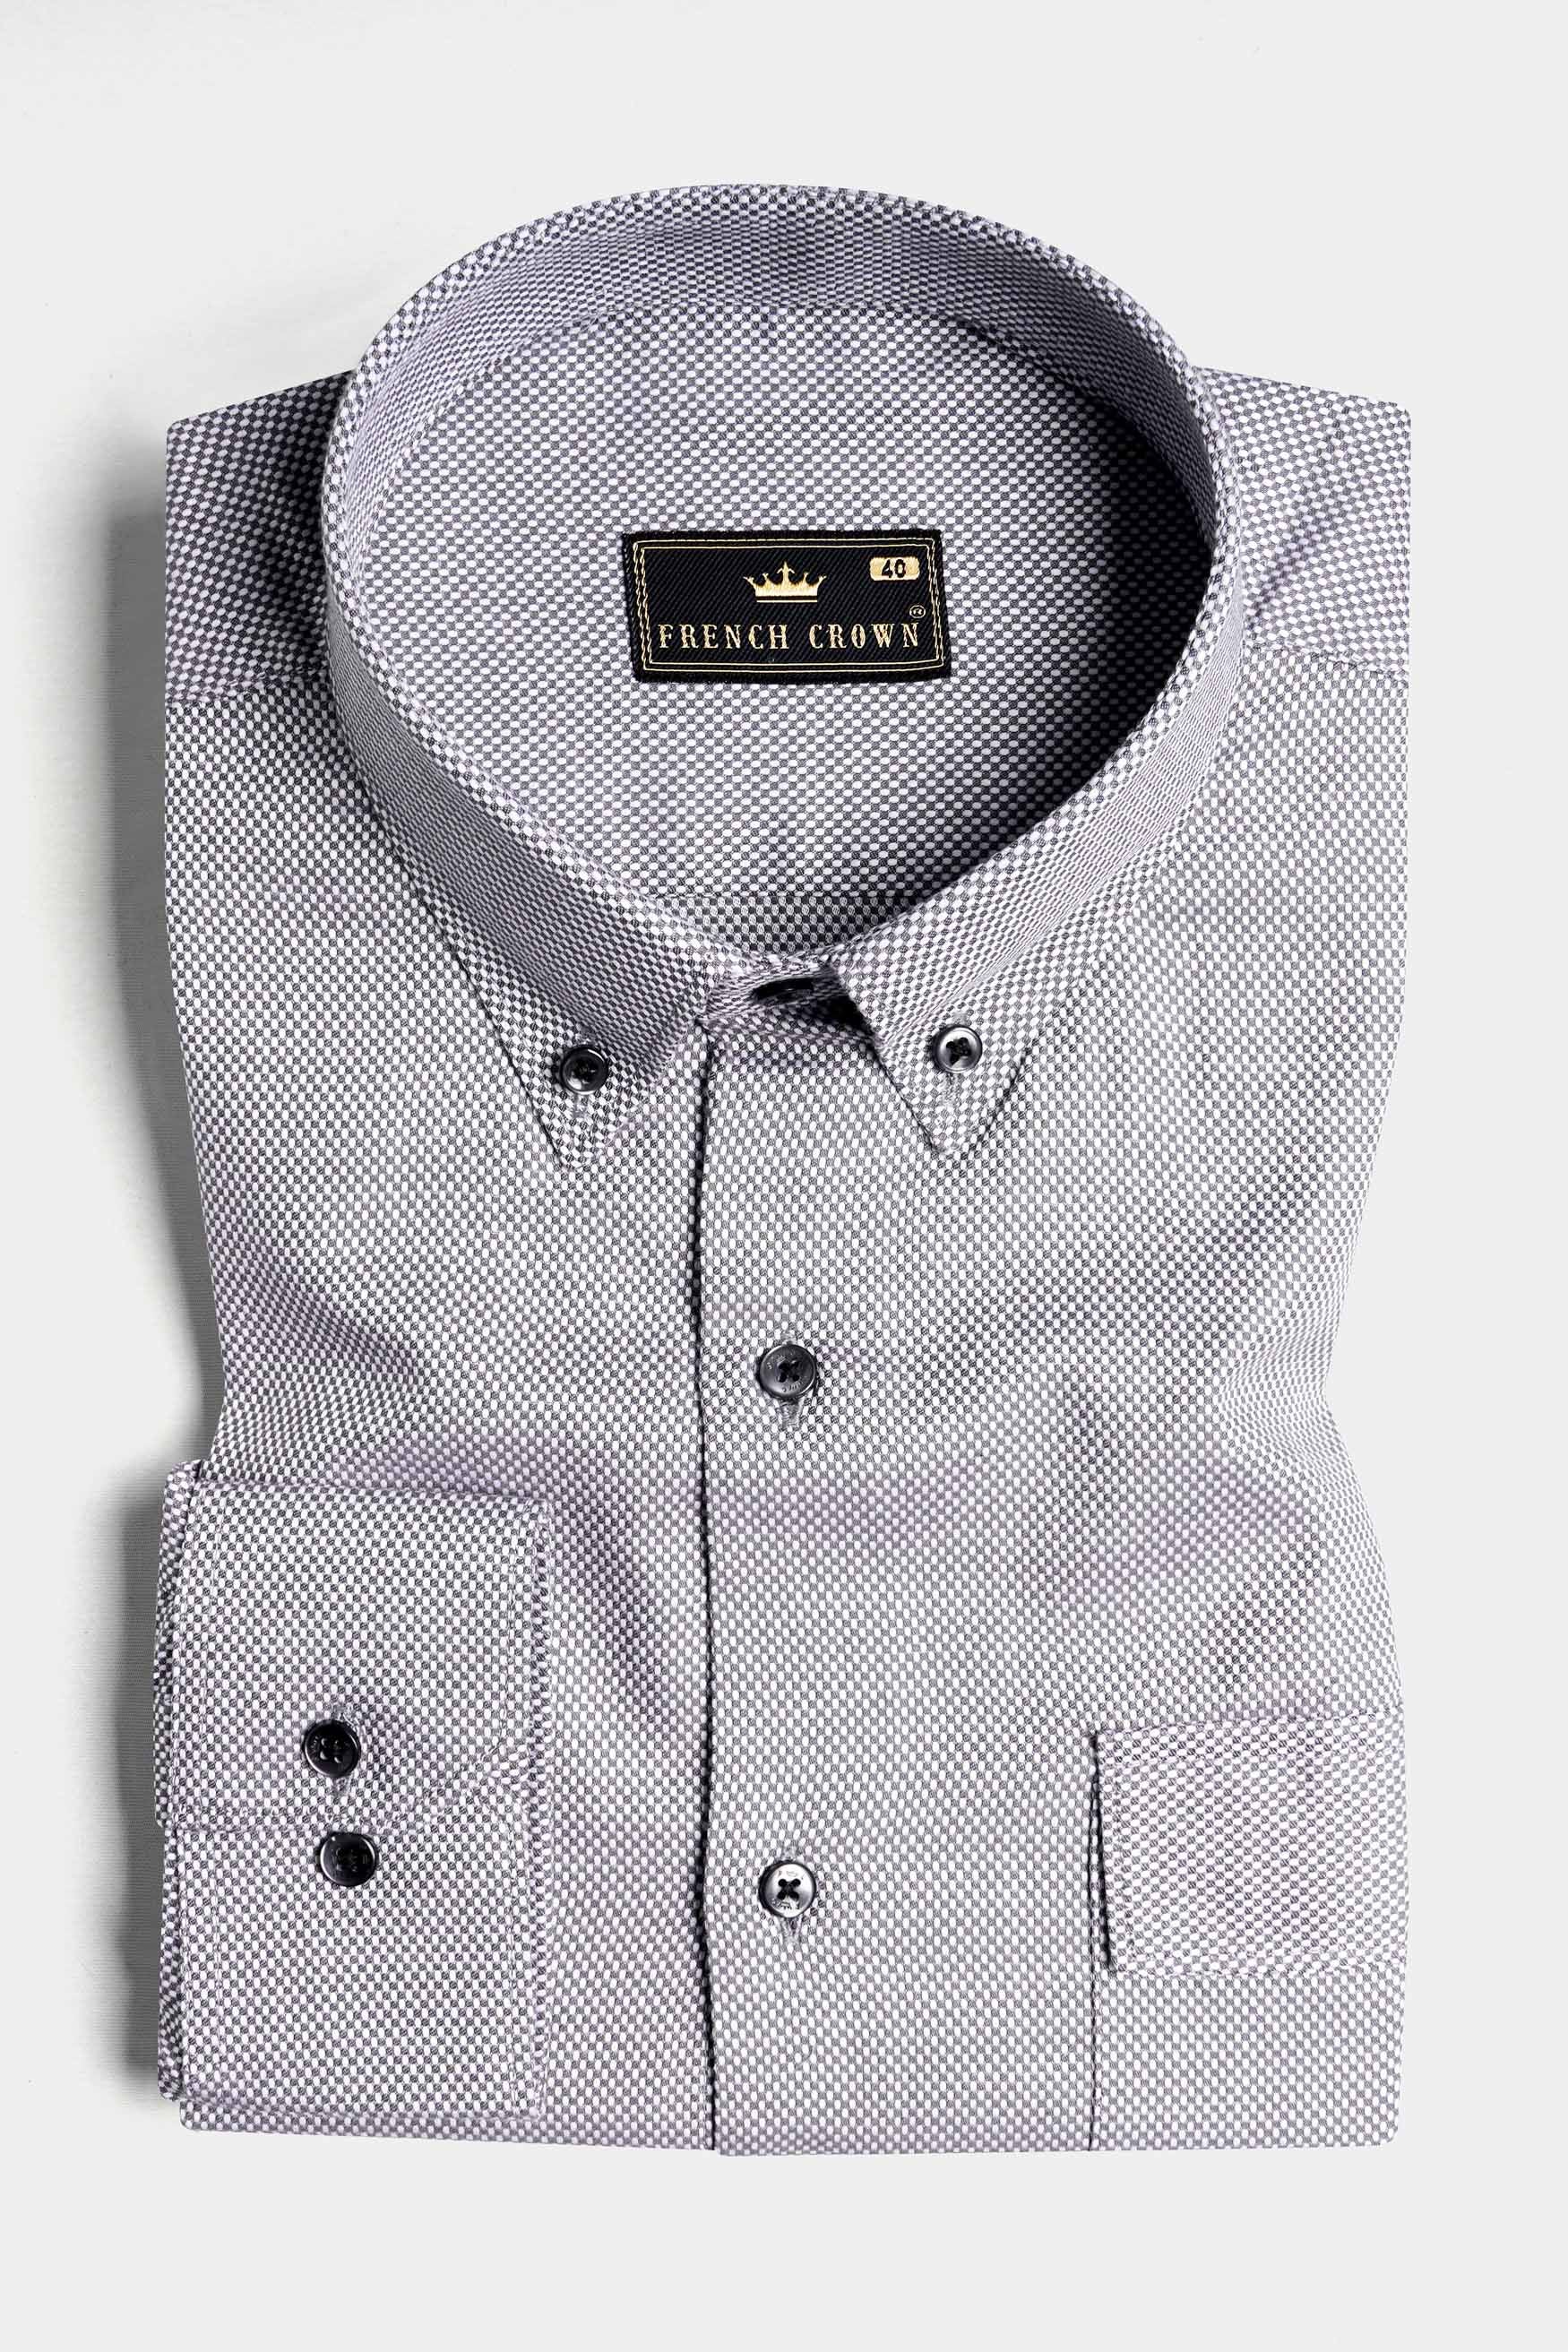 Oslo Gray Dobby Textured Premium Giza Cotton Designer Shirt